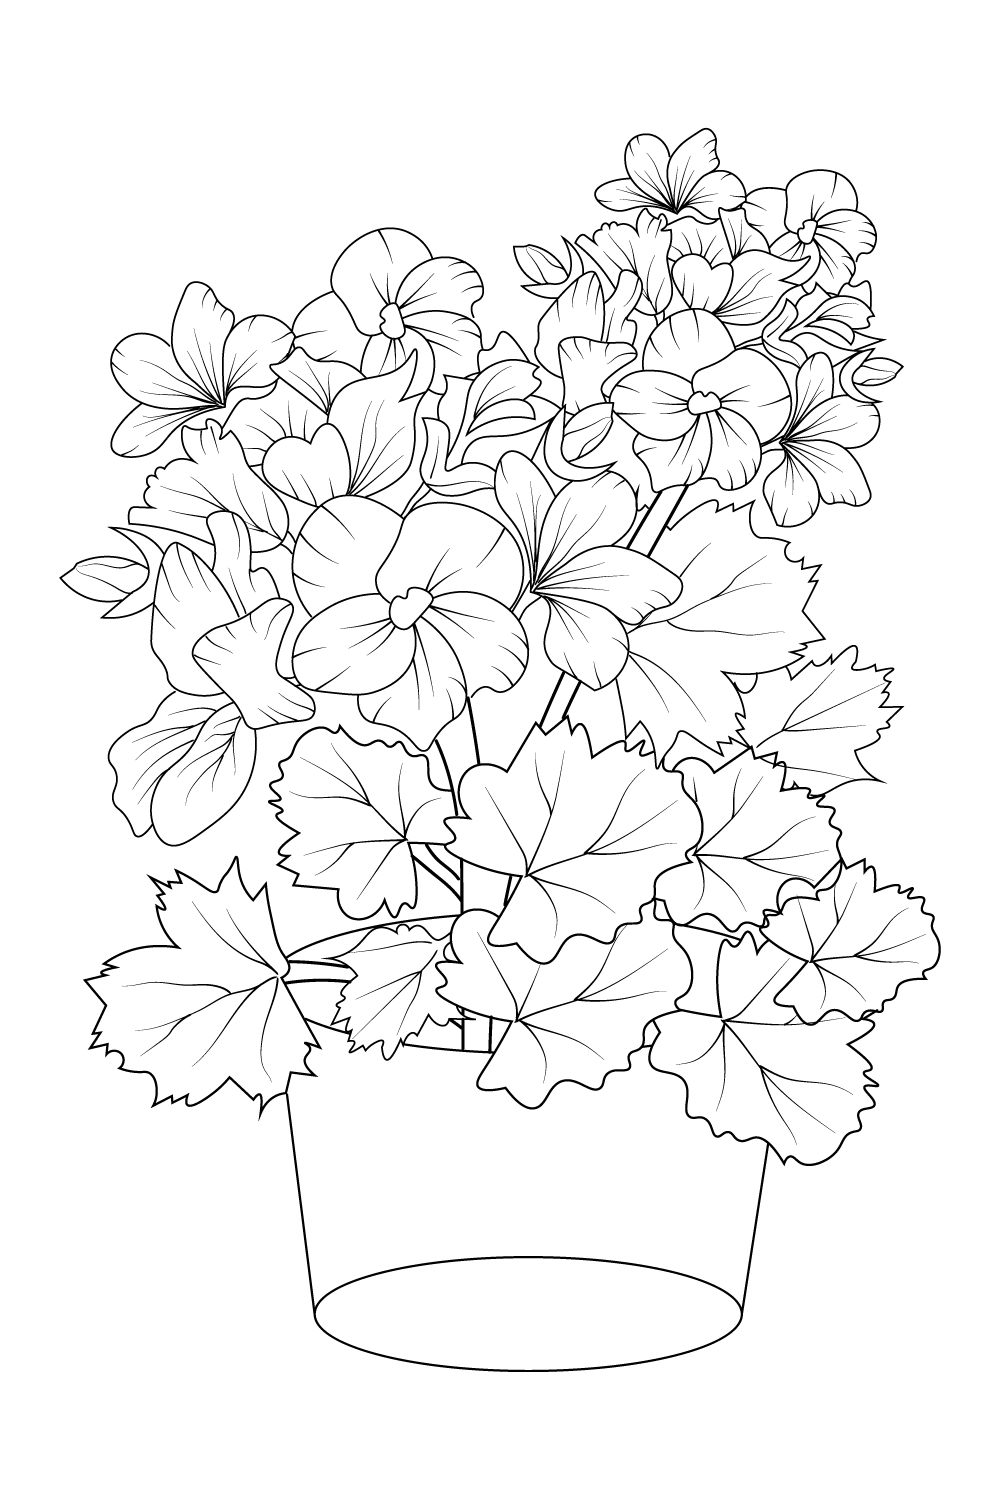 vintage geranium botanical illustration, easy geranium flower drawing, outline geranium drawing, geranium flower pencil art, botanical illustratioin, flower coloring page for adults pinterest preview image.